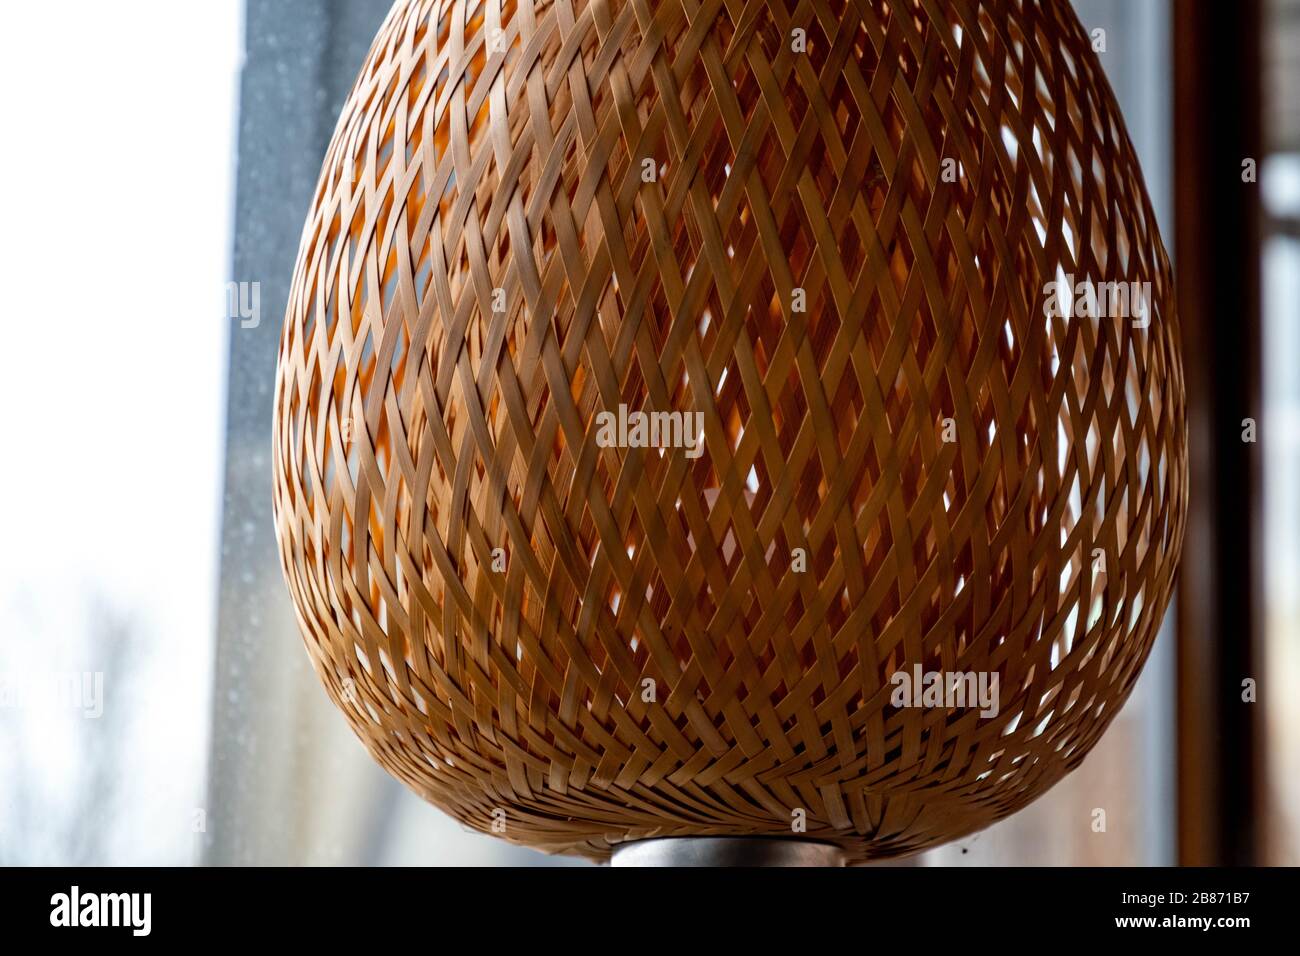 Wicker straw lampshade closeup. Natural crossed straw woven lattice texture with backlighting. Shaped lattice lamp. Light beige grid pattern. Geometri Stock Photo